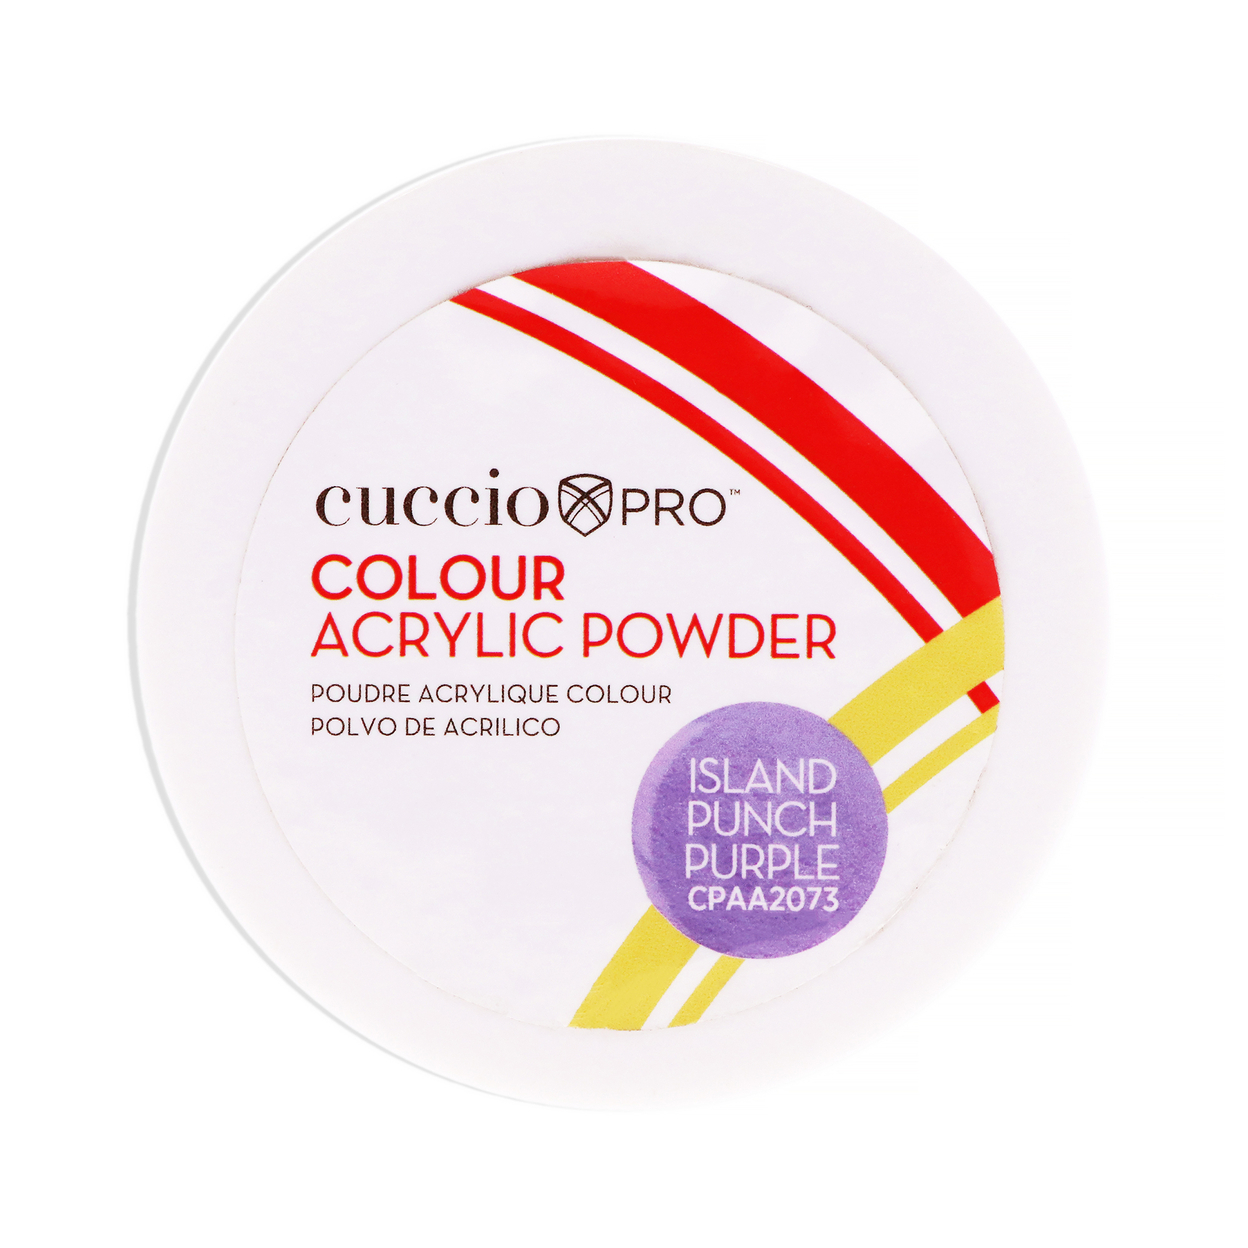 Cuccio PRO Colour Acrylic Powder - Island Punch Purple 1.6 Oz